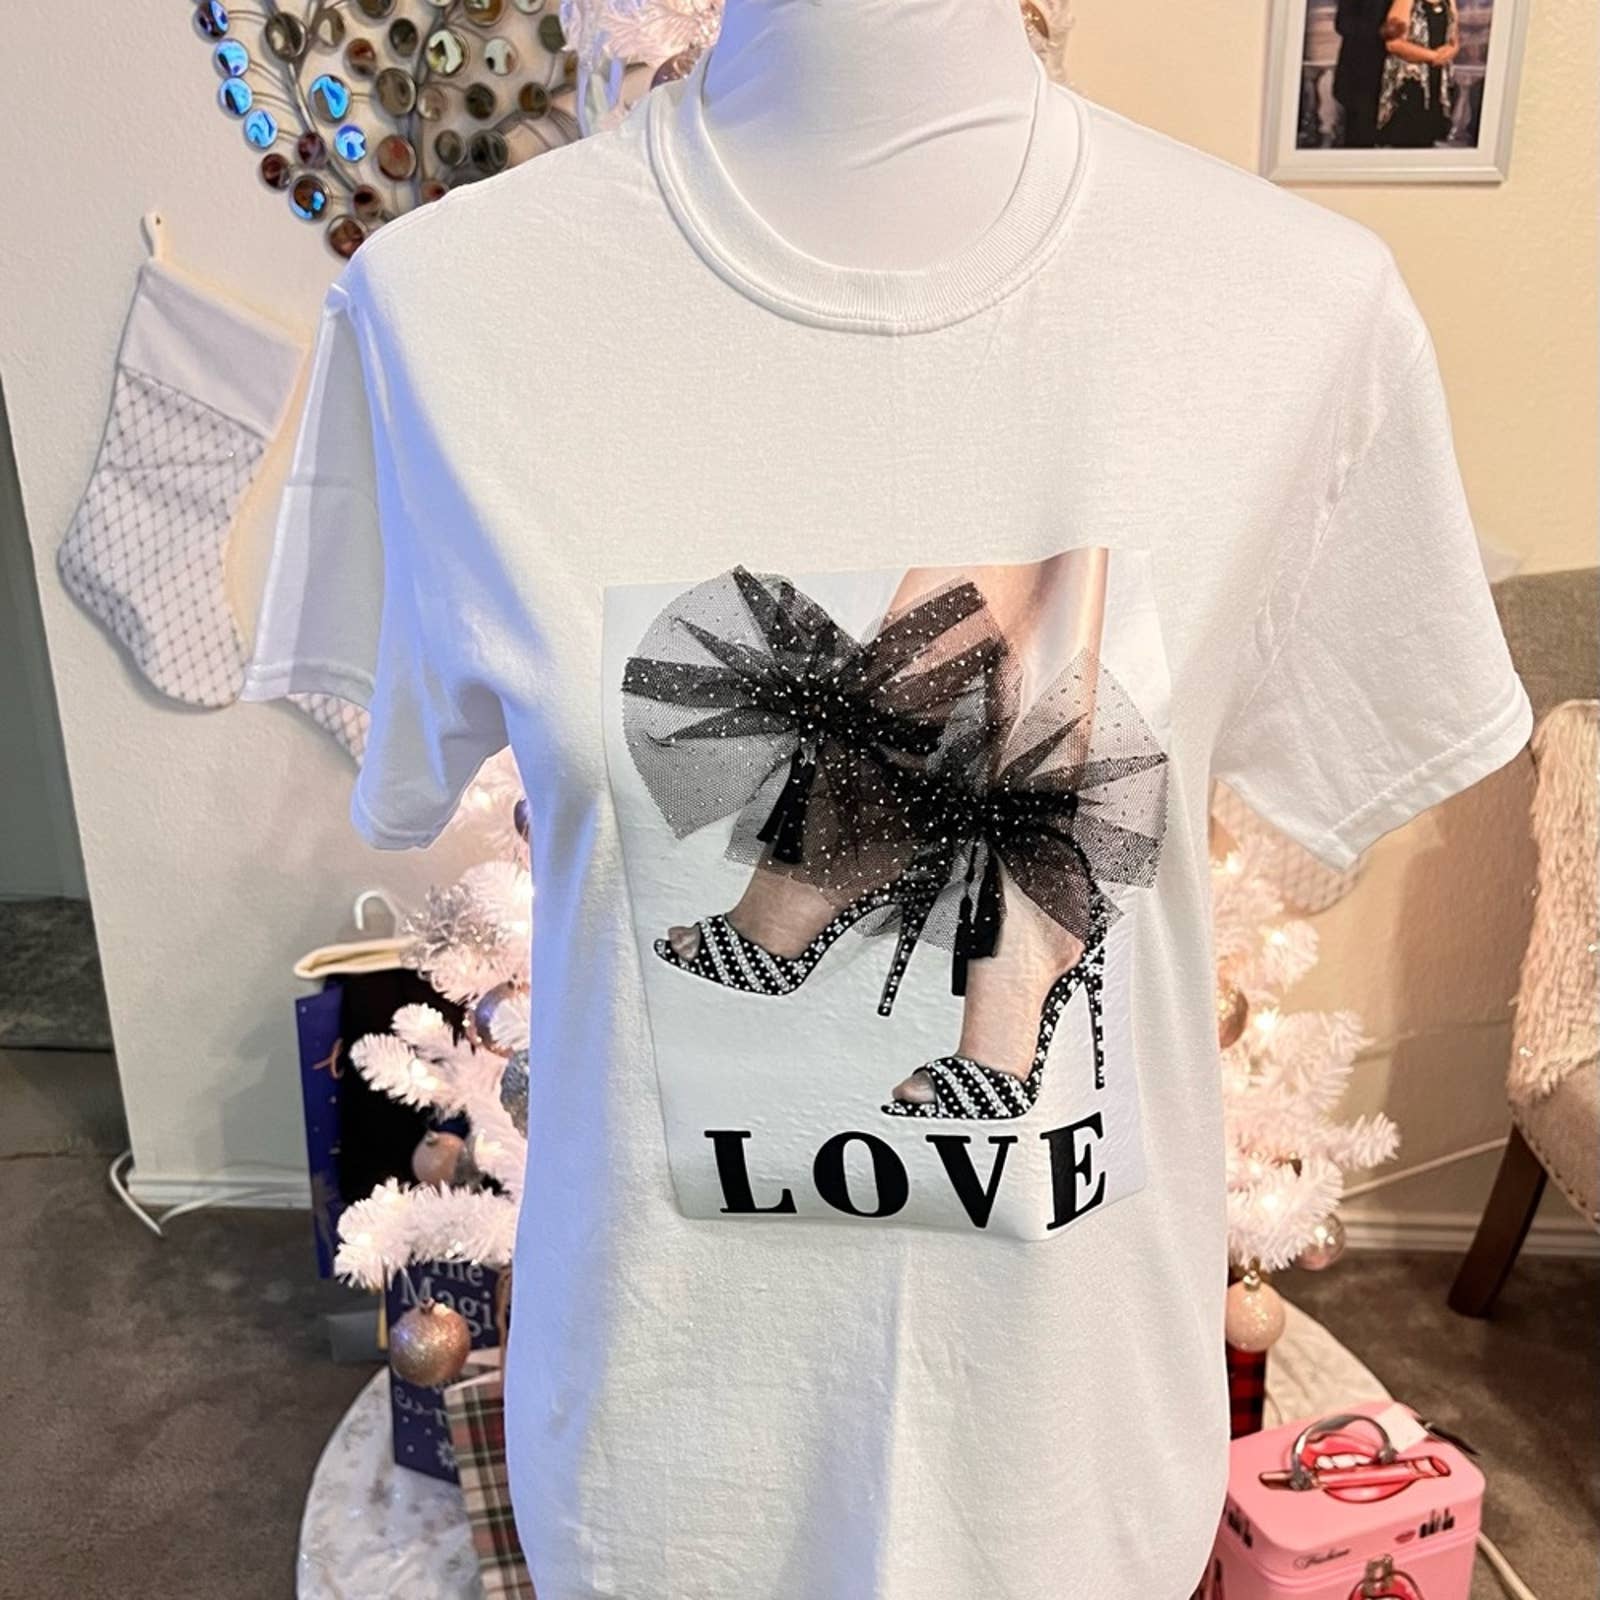 Love Stepping Heel Tee Shirt Custom Design - Passion of Essence Boutique